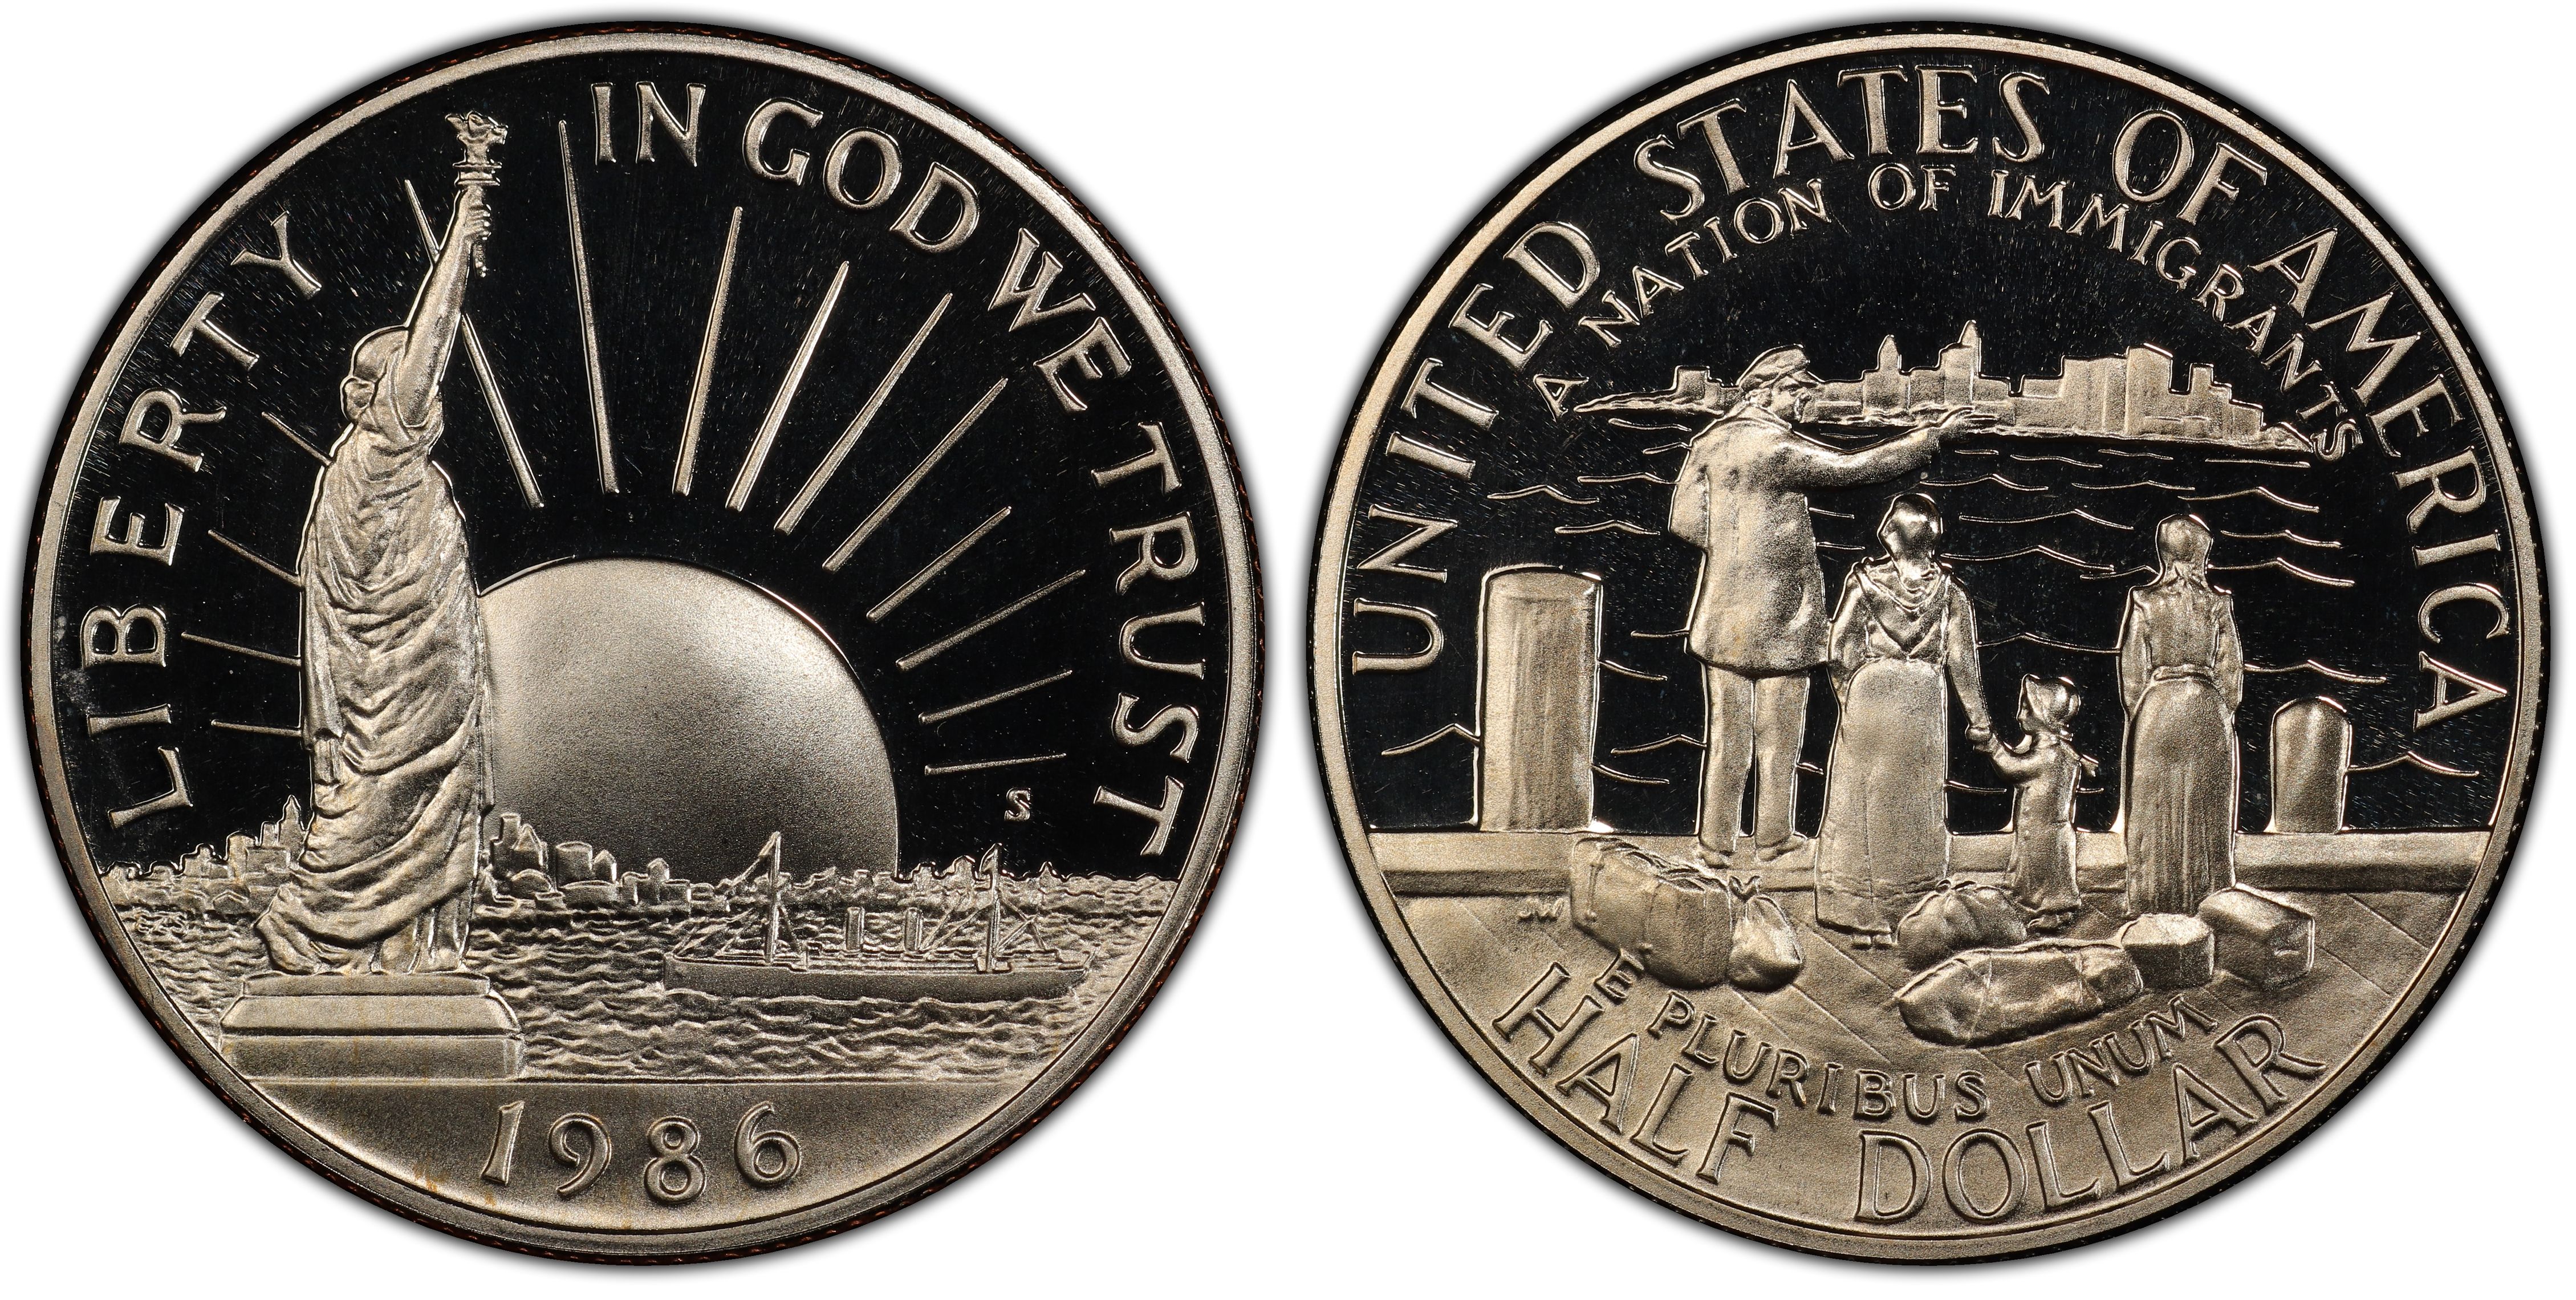 1986 S Statue of Liberty Proof Half Dollar Commemorative Coin US Mint